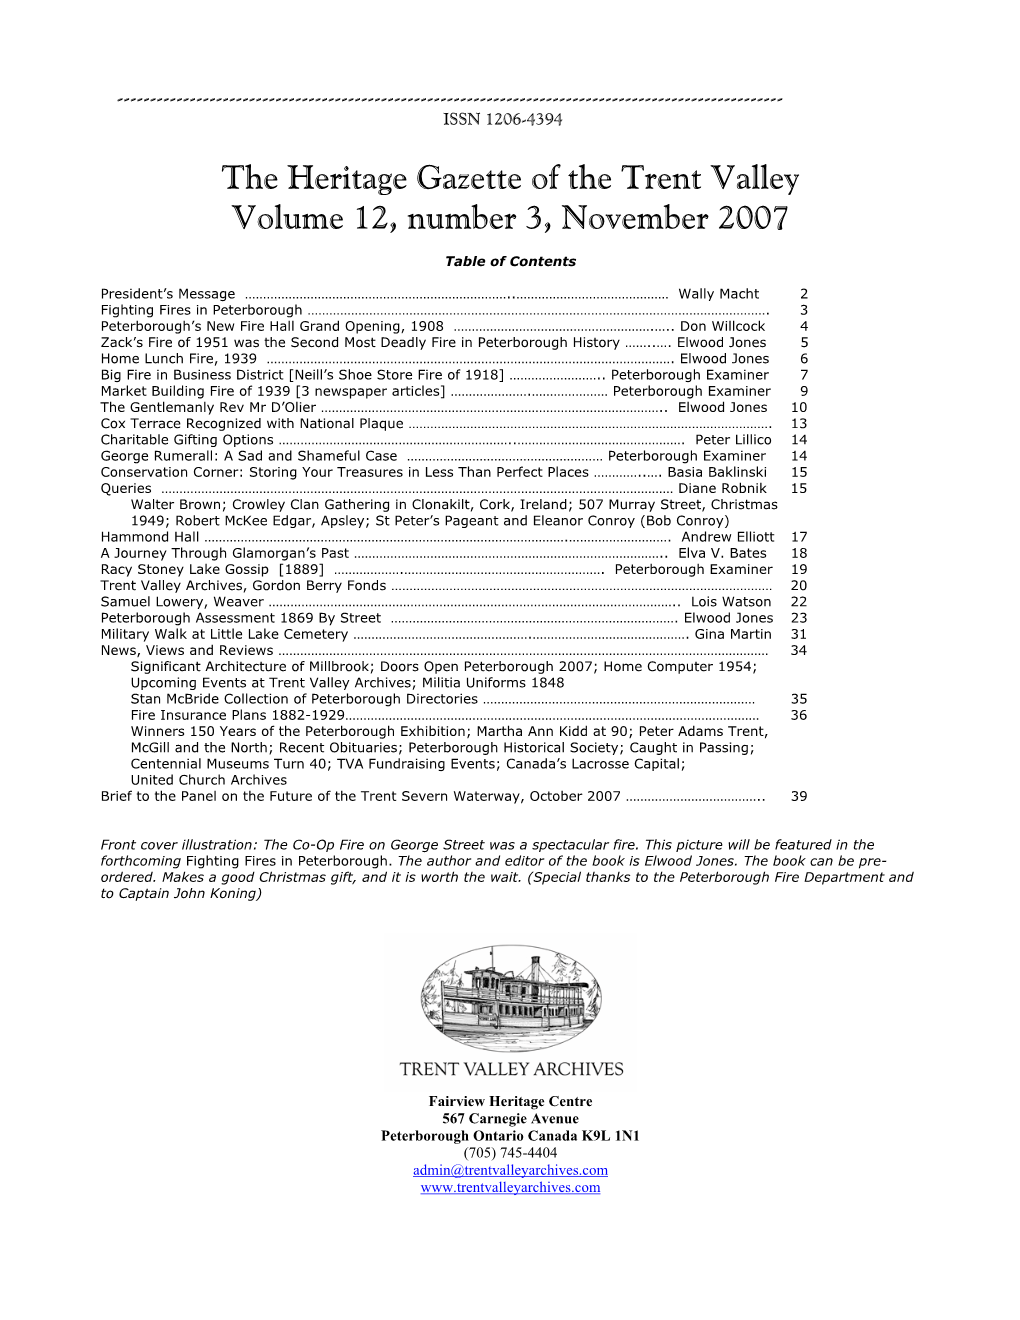 The Heritage Gazette of the Trent Valley Volume 12, Number 3, November 2007